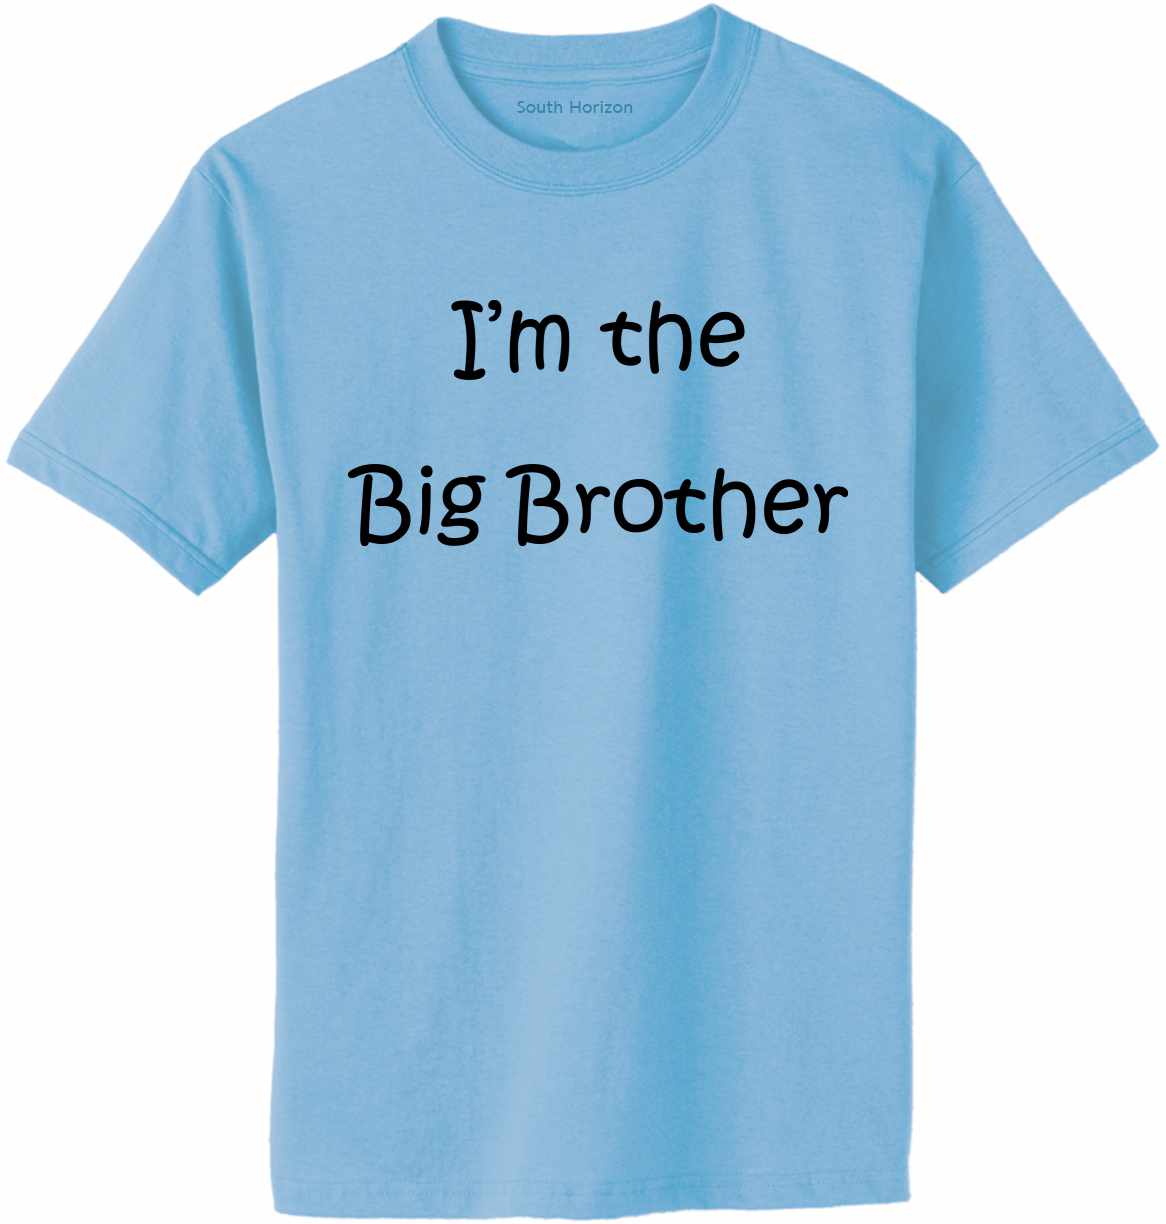 I'M THE BIG BROTHER Adult T-Shirt